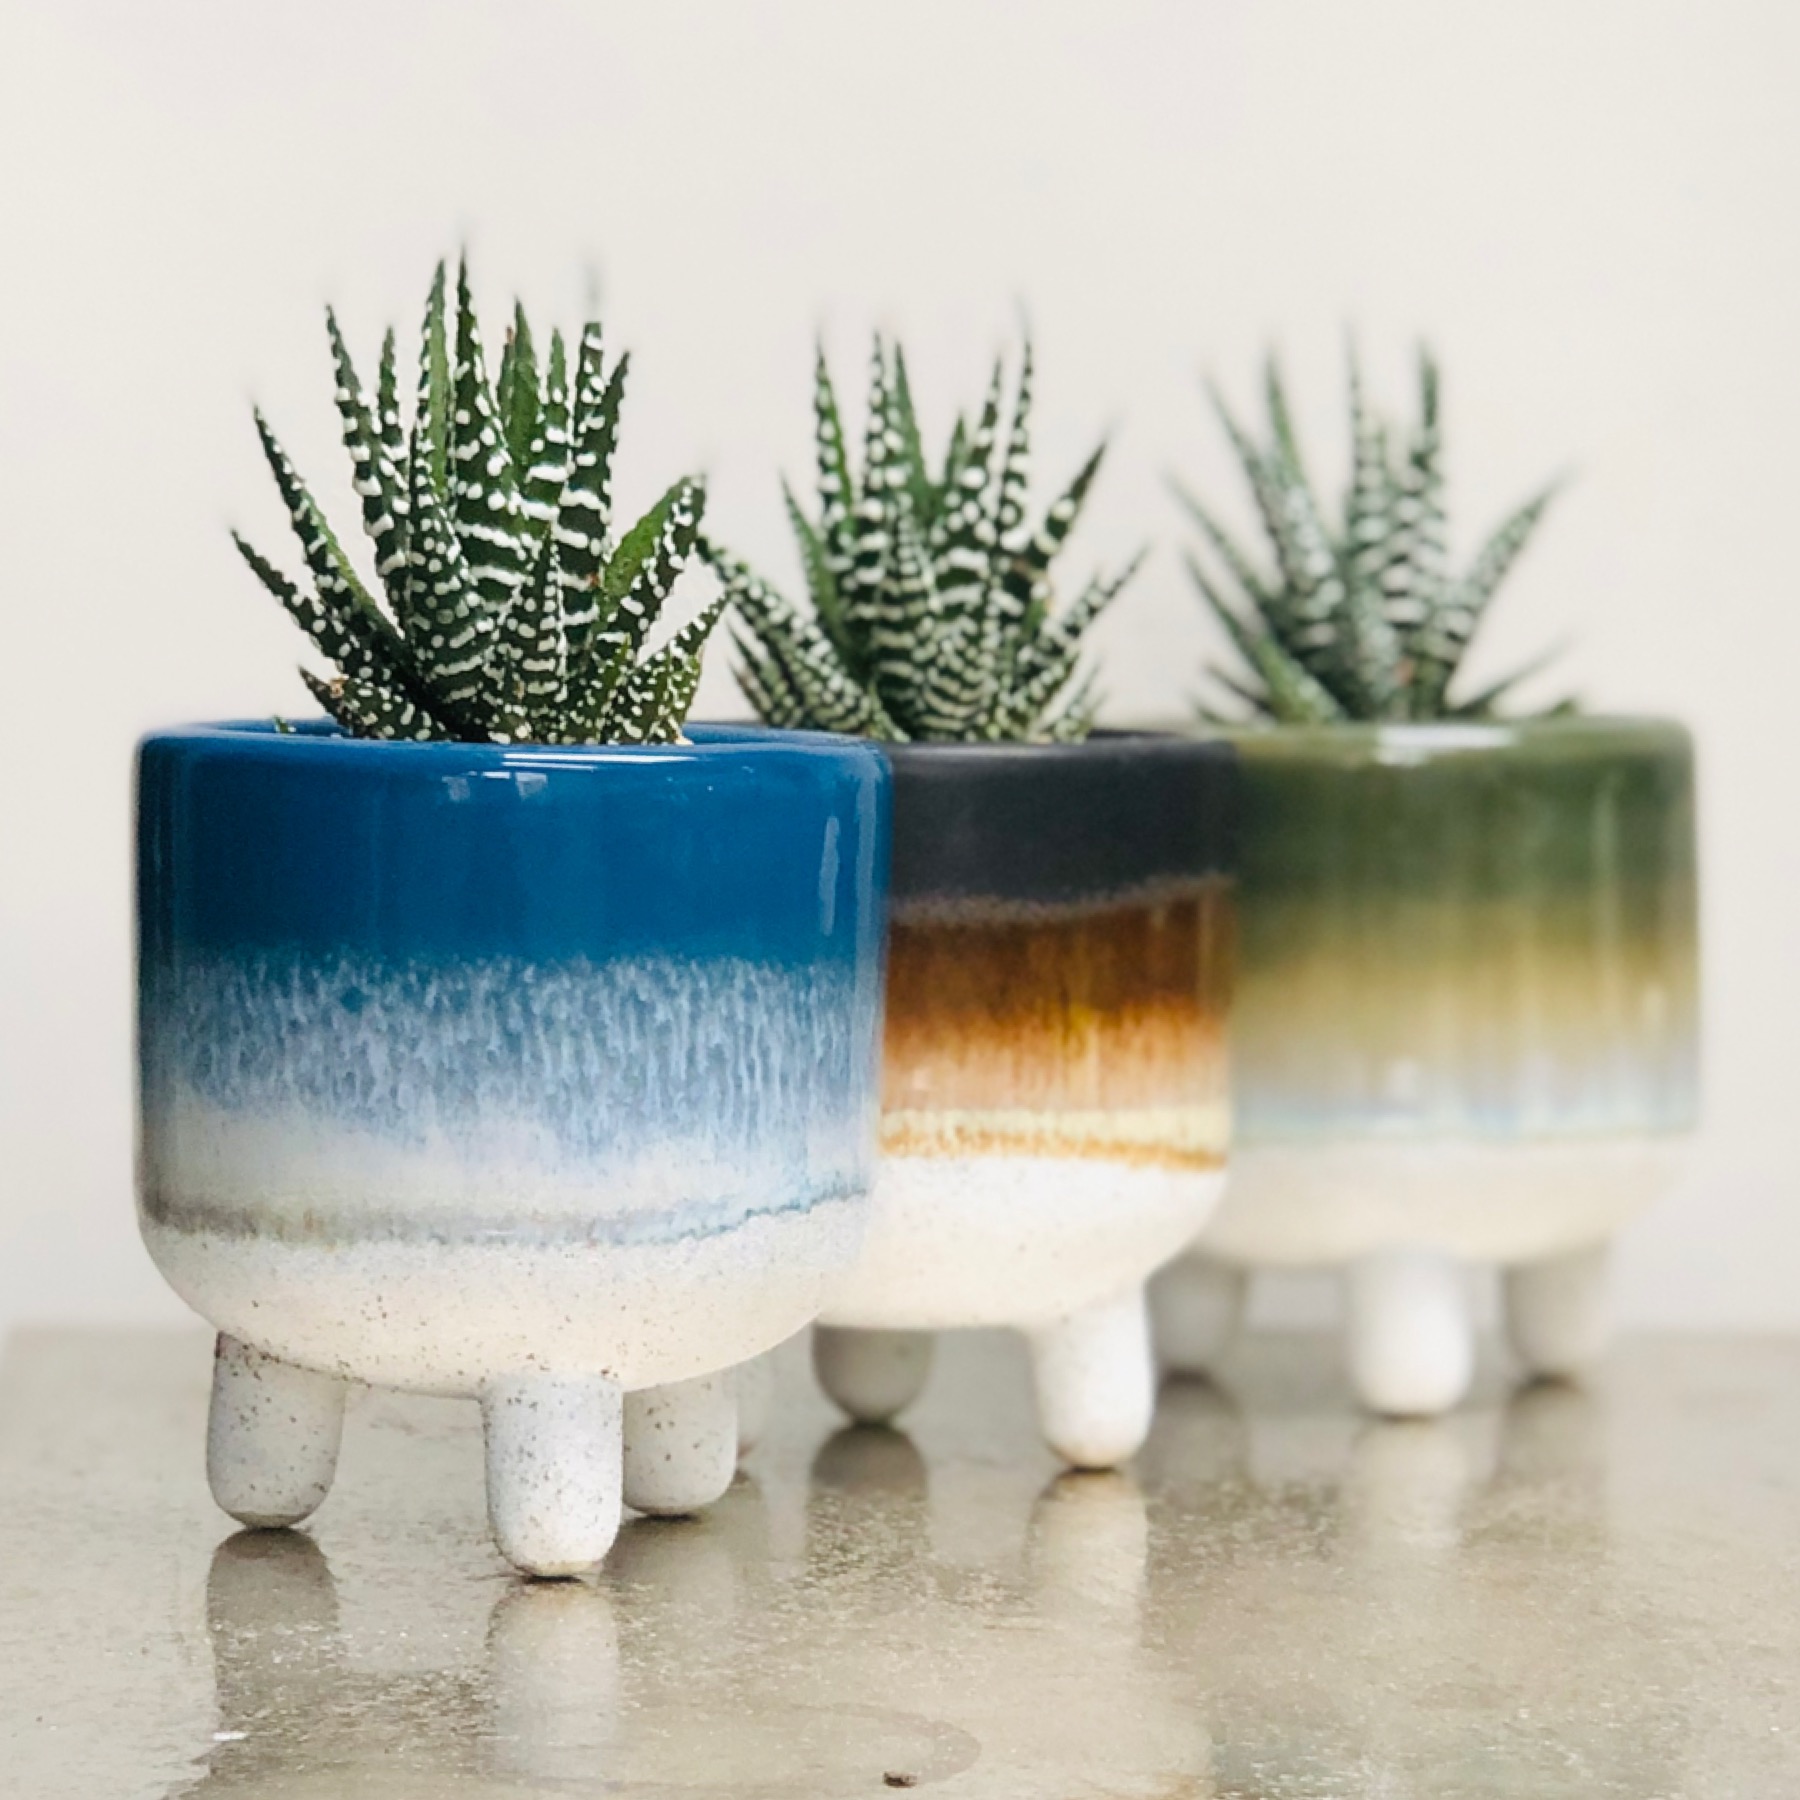 Cactus Parlour, half glazed ceramic planters with haworthia plants